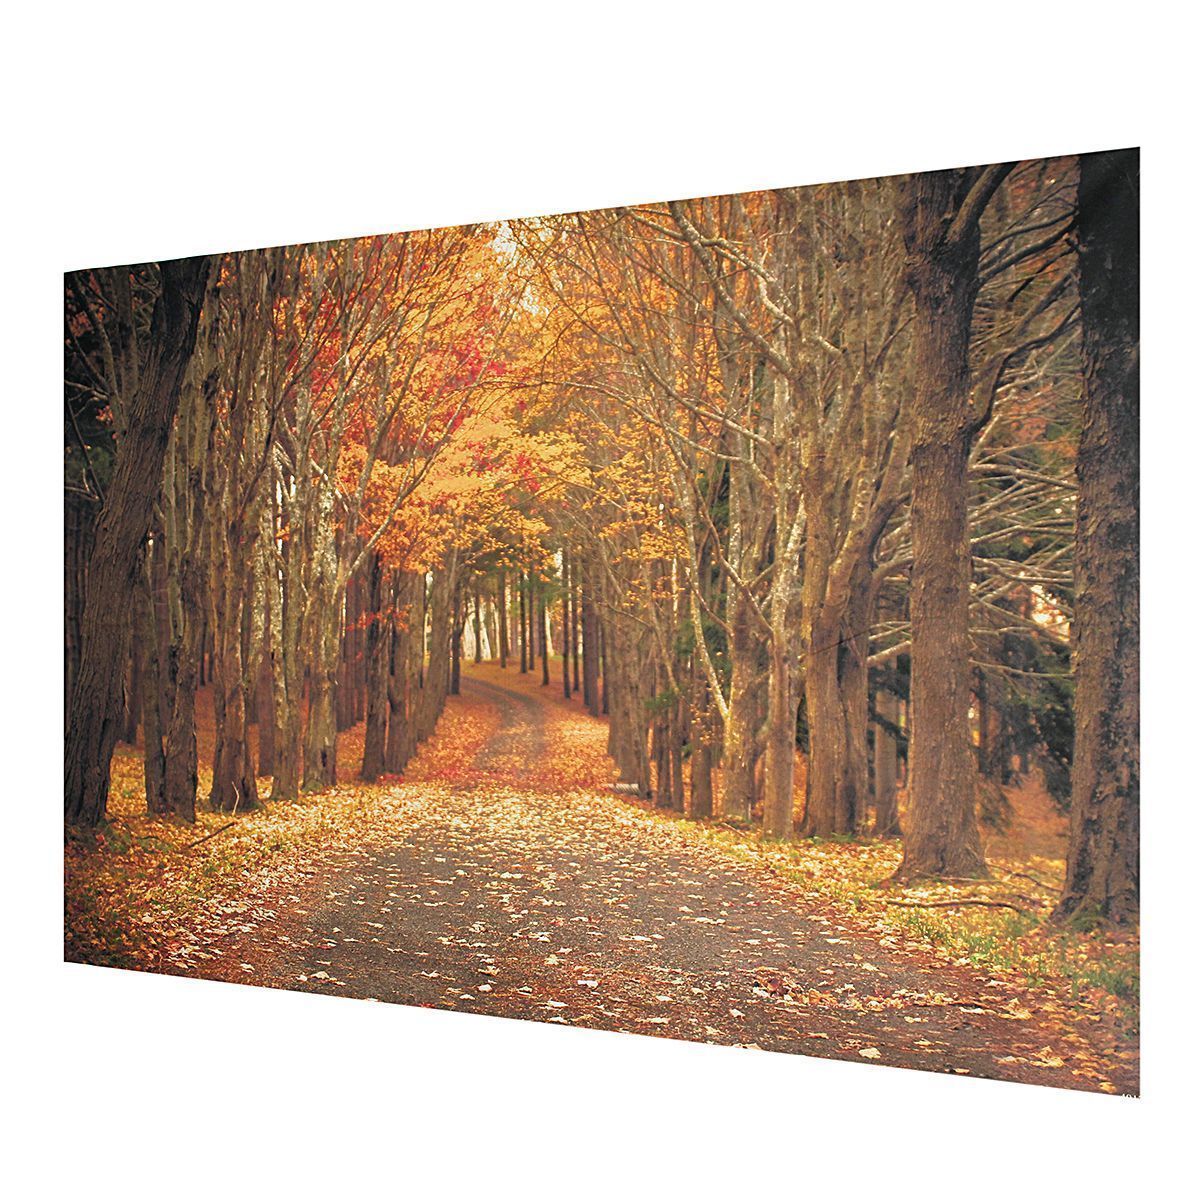 7x5ft-Autumn-Forest-Background-Photography-Backdrop-Studio-Photo-Vinyl-Cloth-1142370